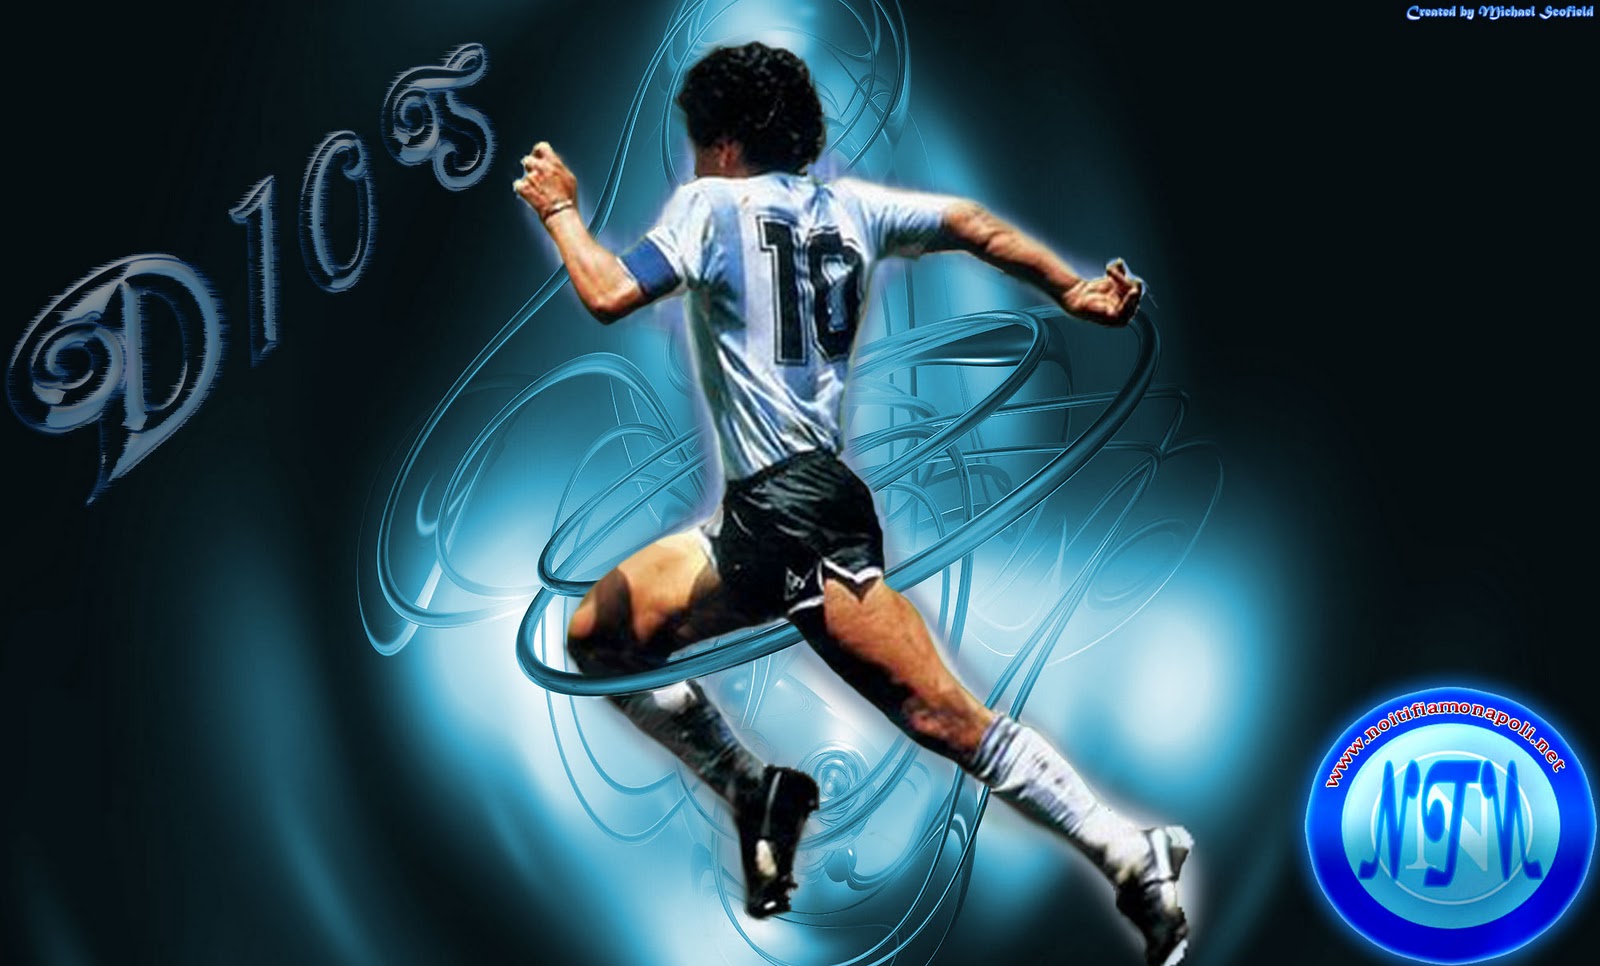 Diego Armando Maradona Wallpaper X